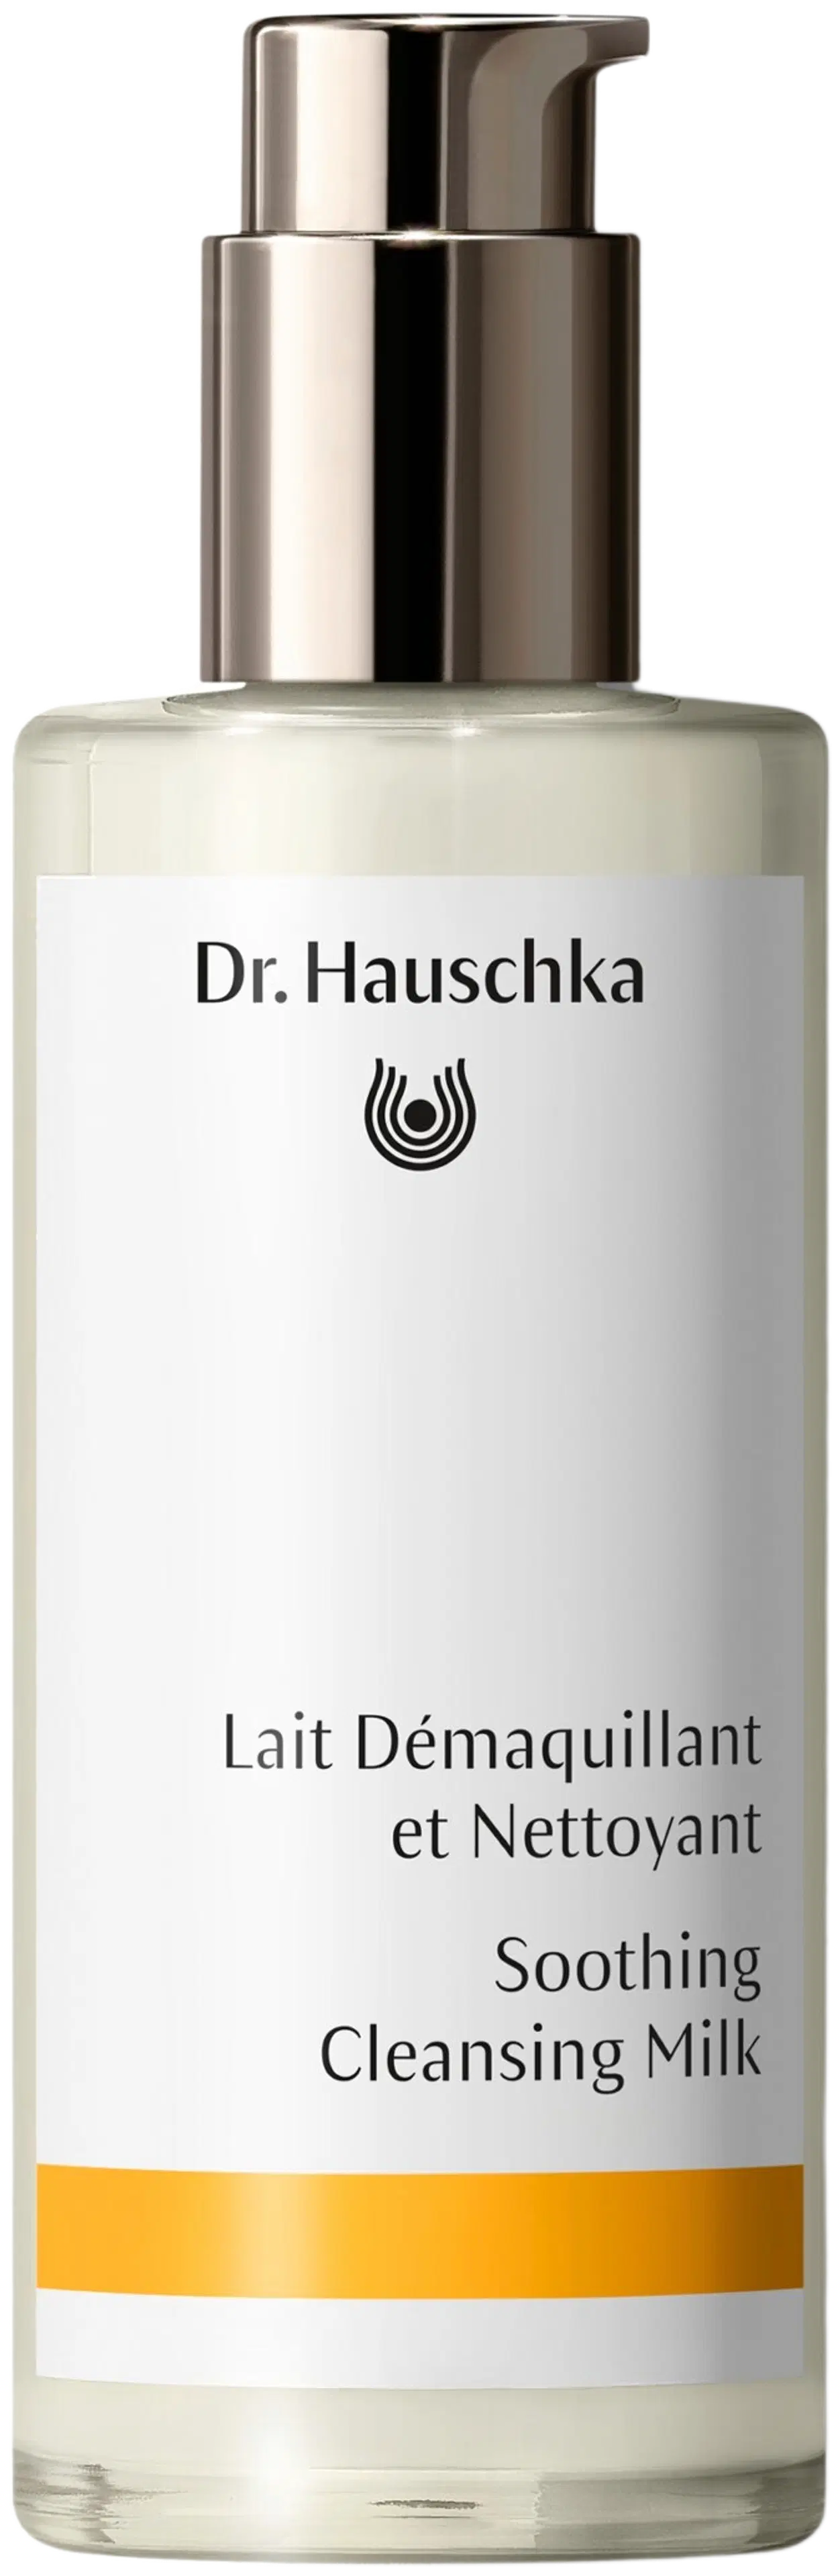 Dr. Hauschka Soothing Cleansing Milk puhdistusemulsio 145 ml